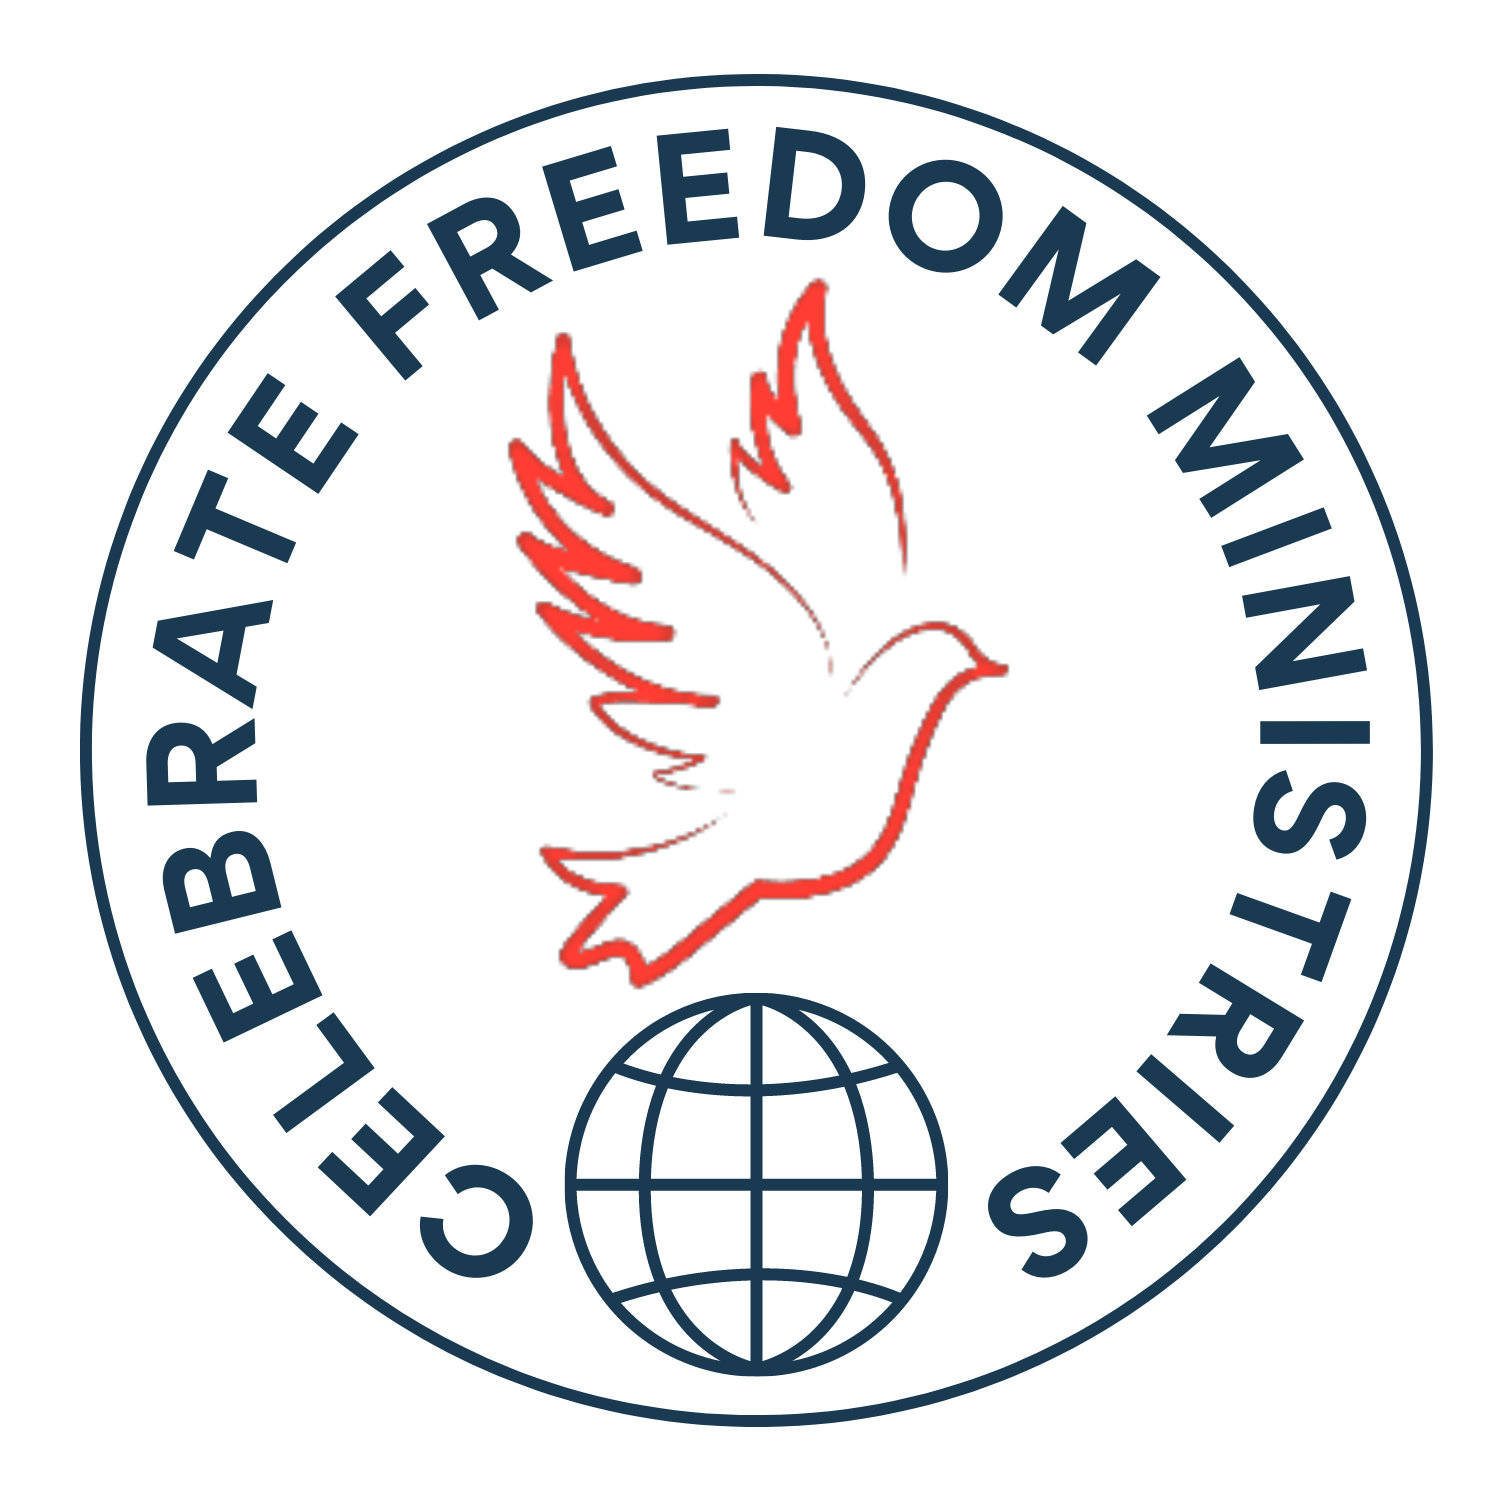 Celebrate Freedom Ministries